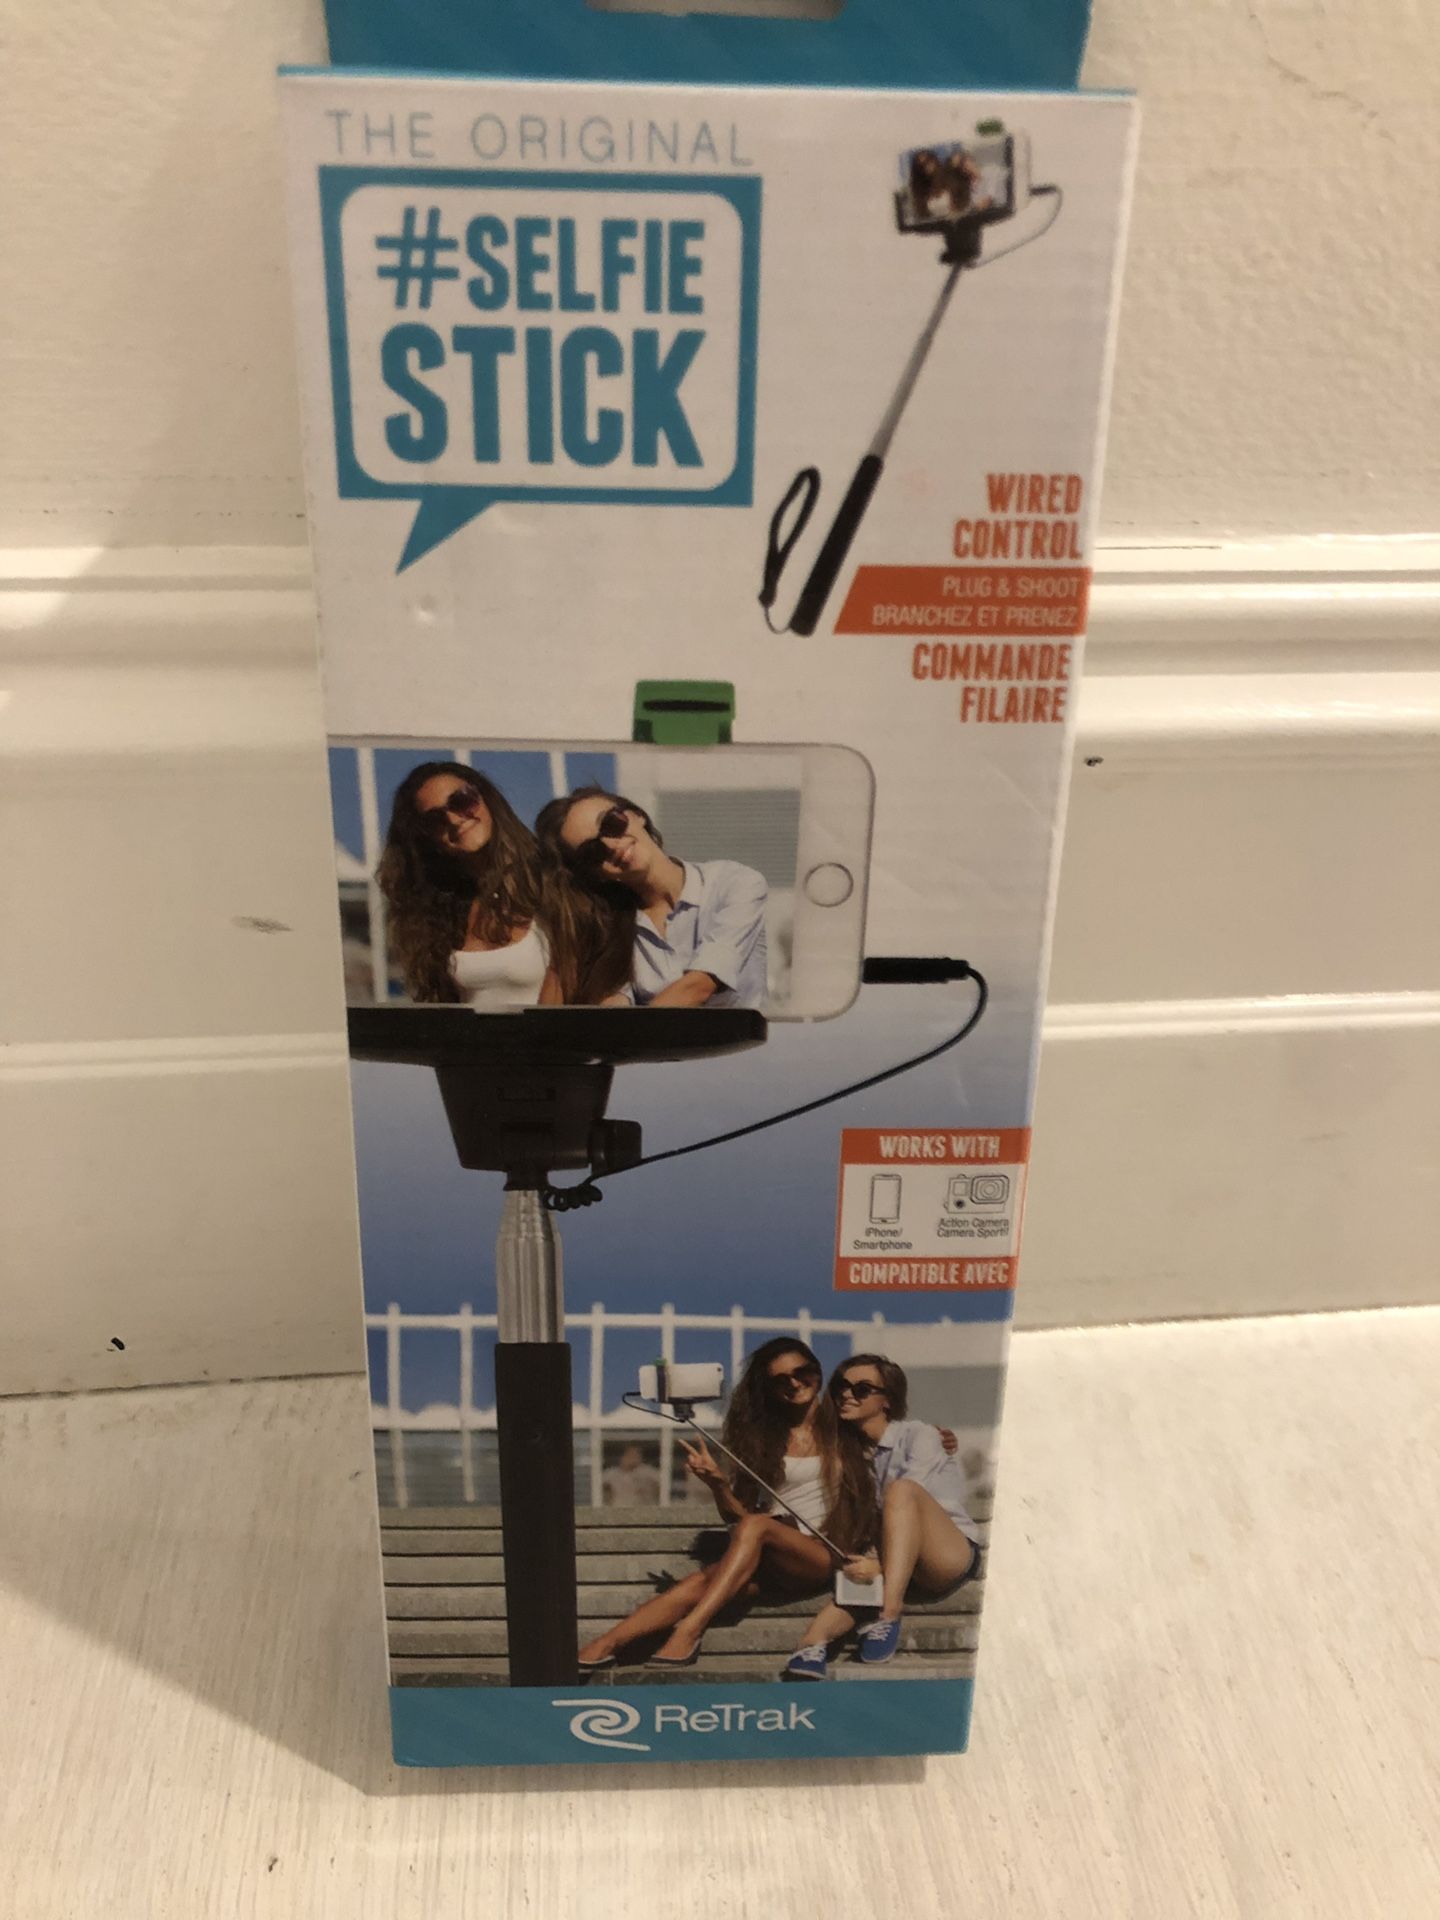 Adjustable Selfie Stick